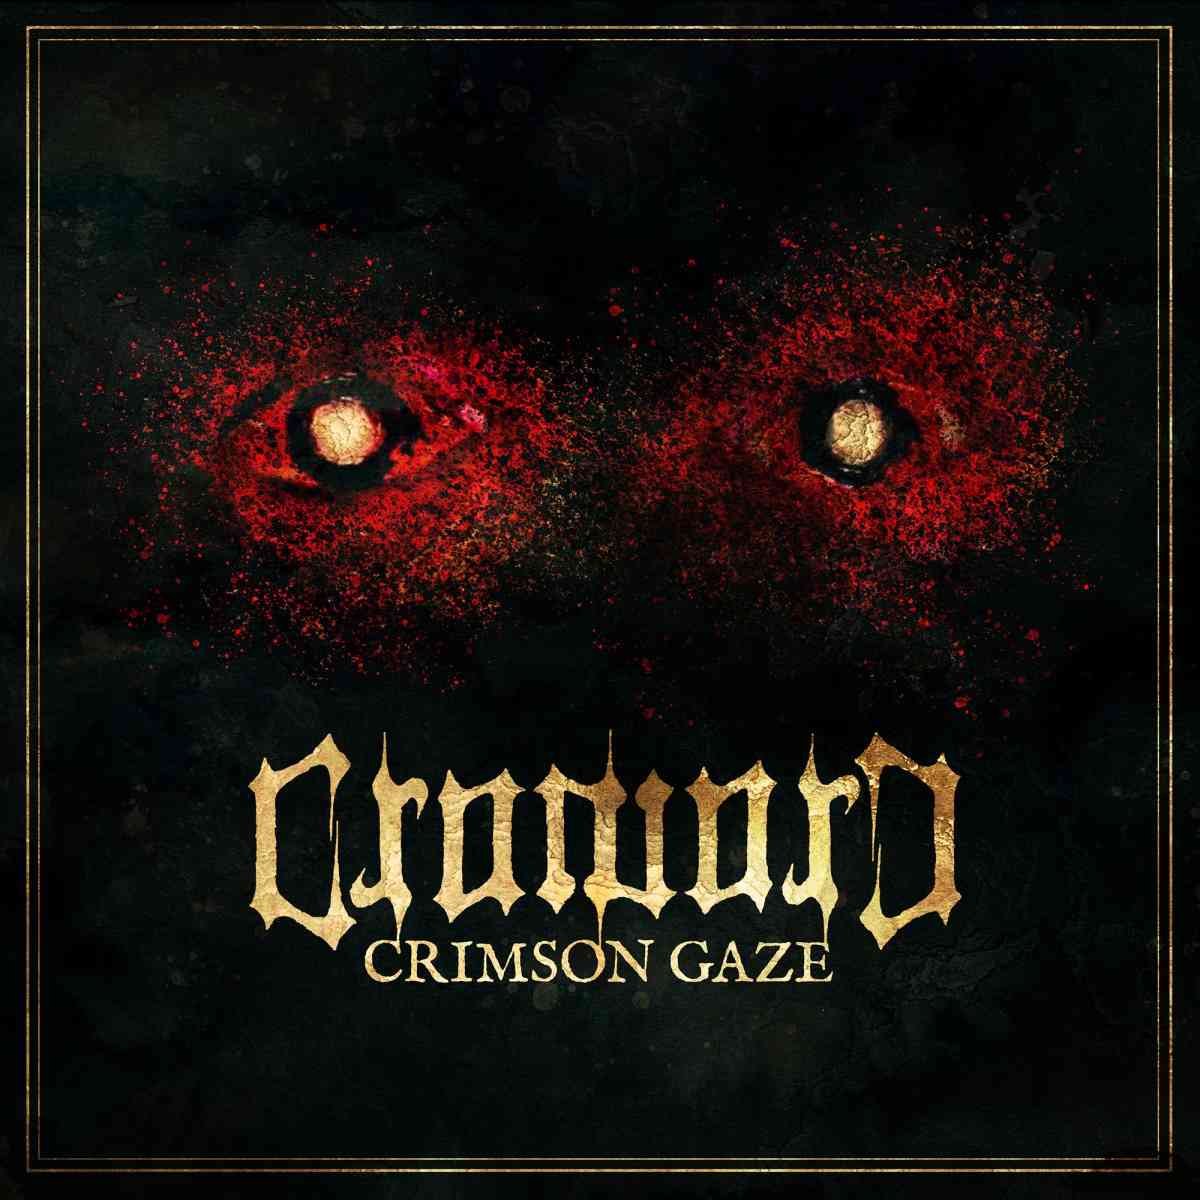 croword - crimson gaze - album cover